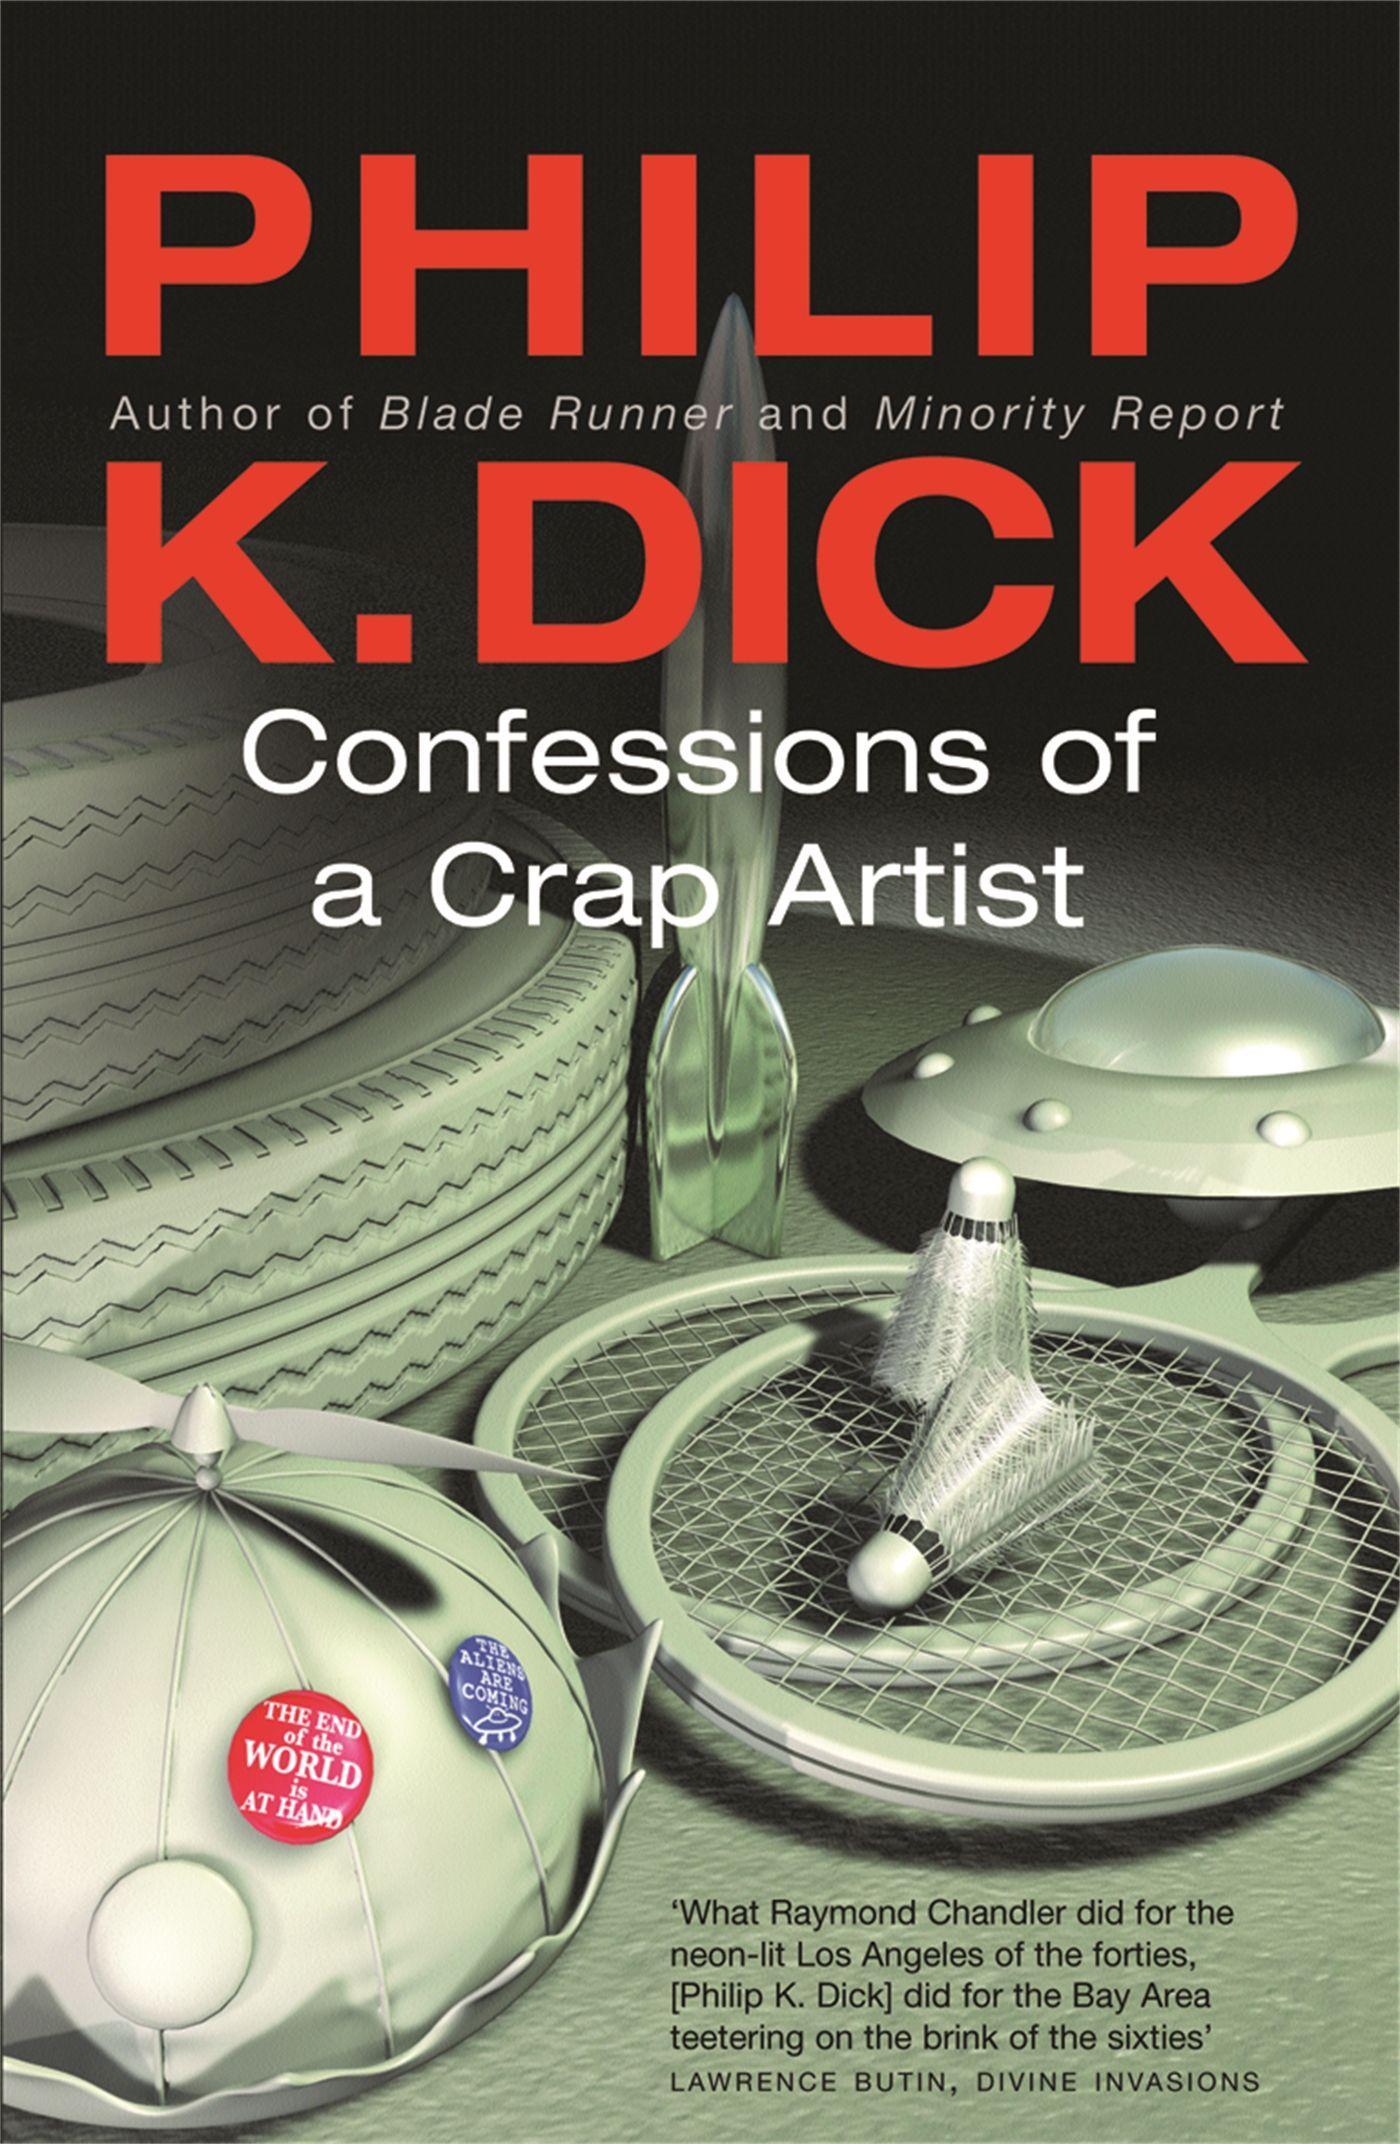 Confessions of a Crap Artist / Philip K Dick / Taschenbuch / Kartoniert / Broschiert / Englisch / 2005 / Orion Publishing Co / EAN 9780575074644 - Dick, Philip K